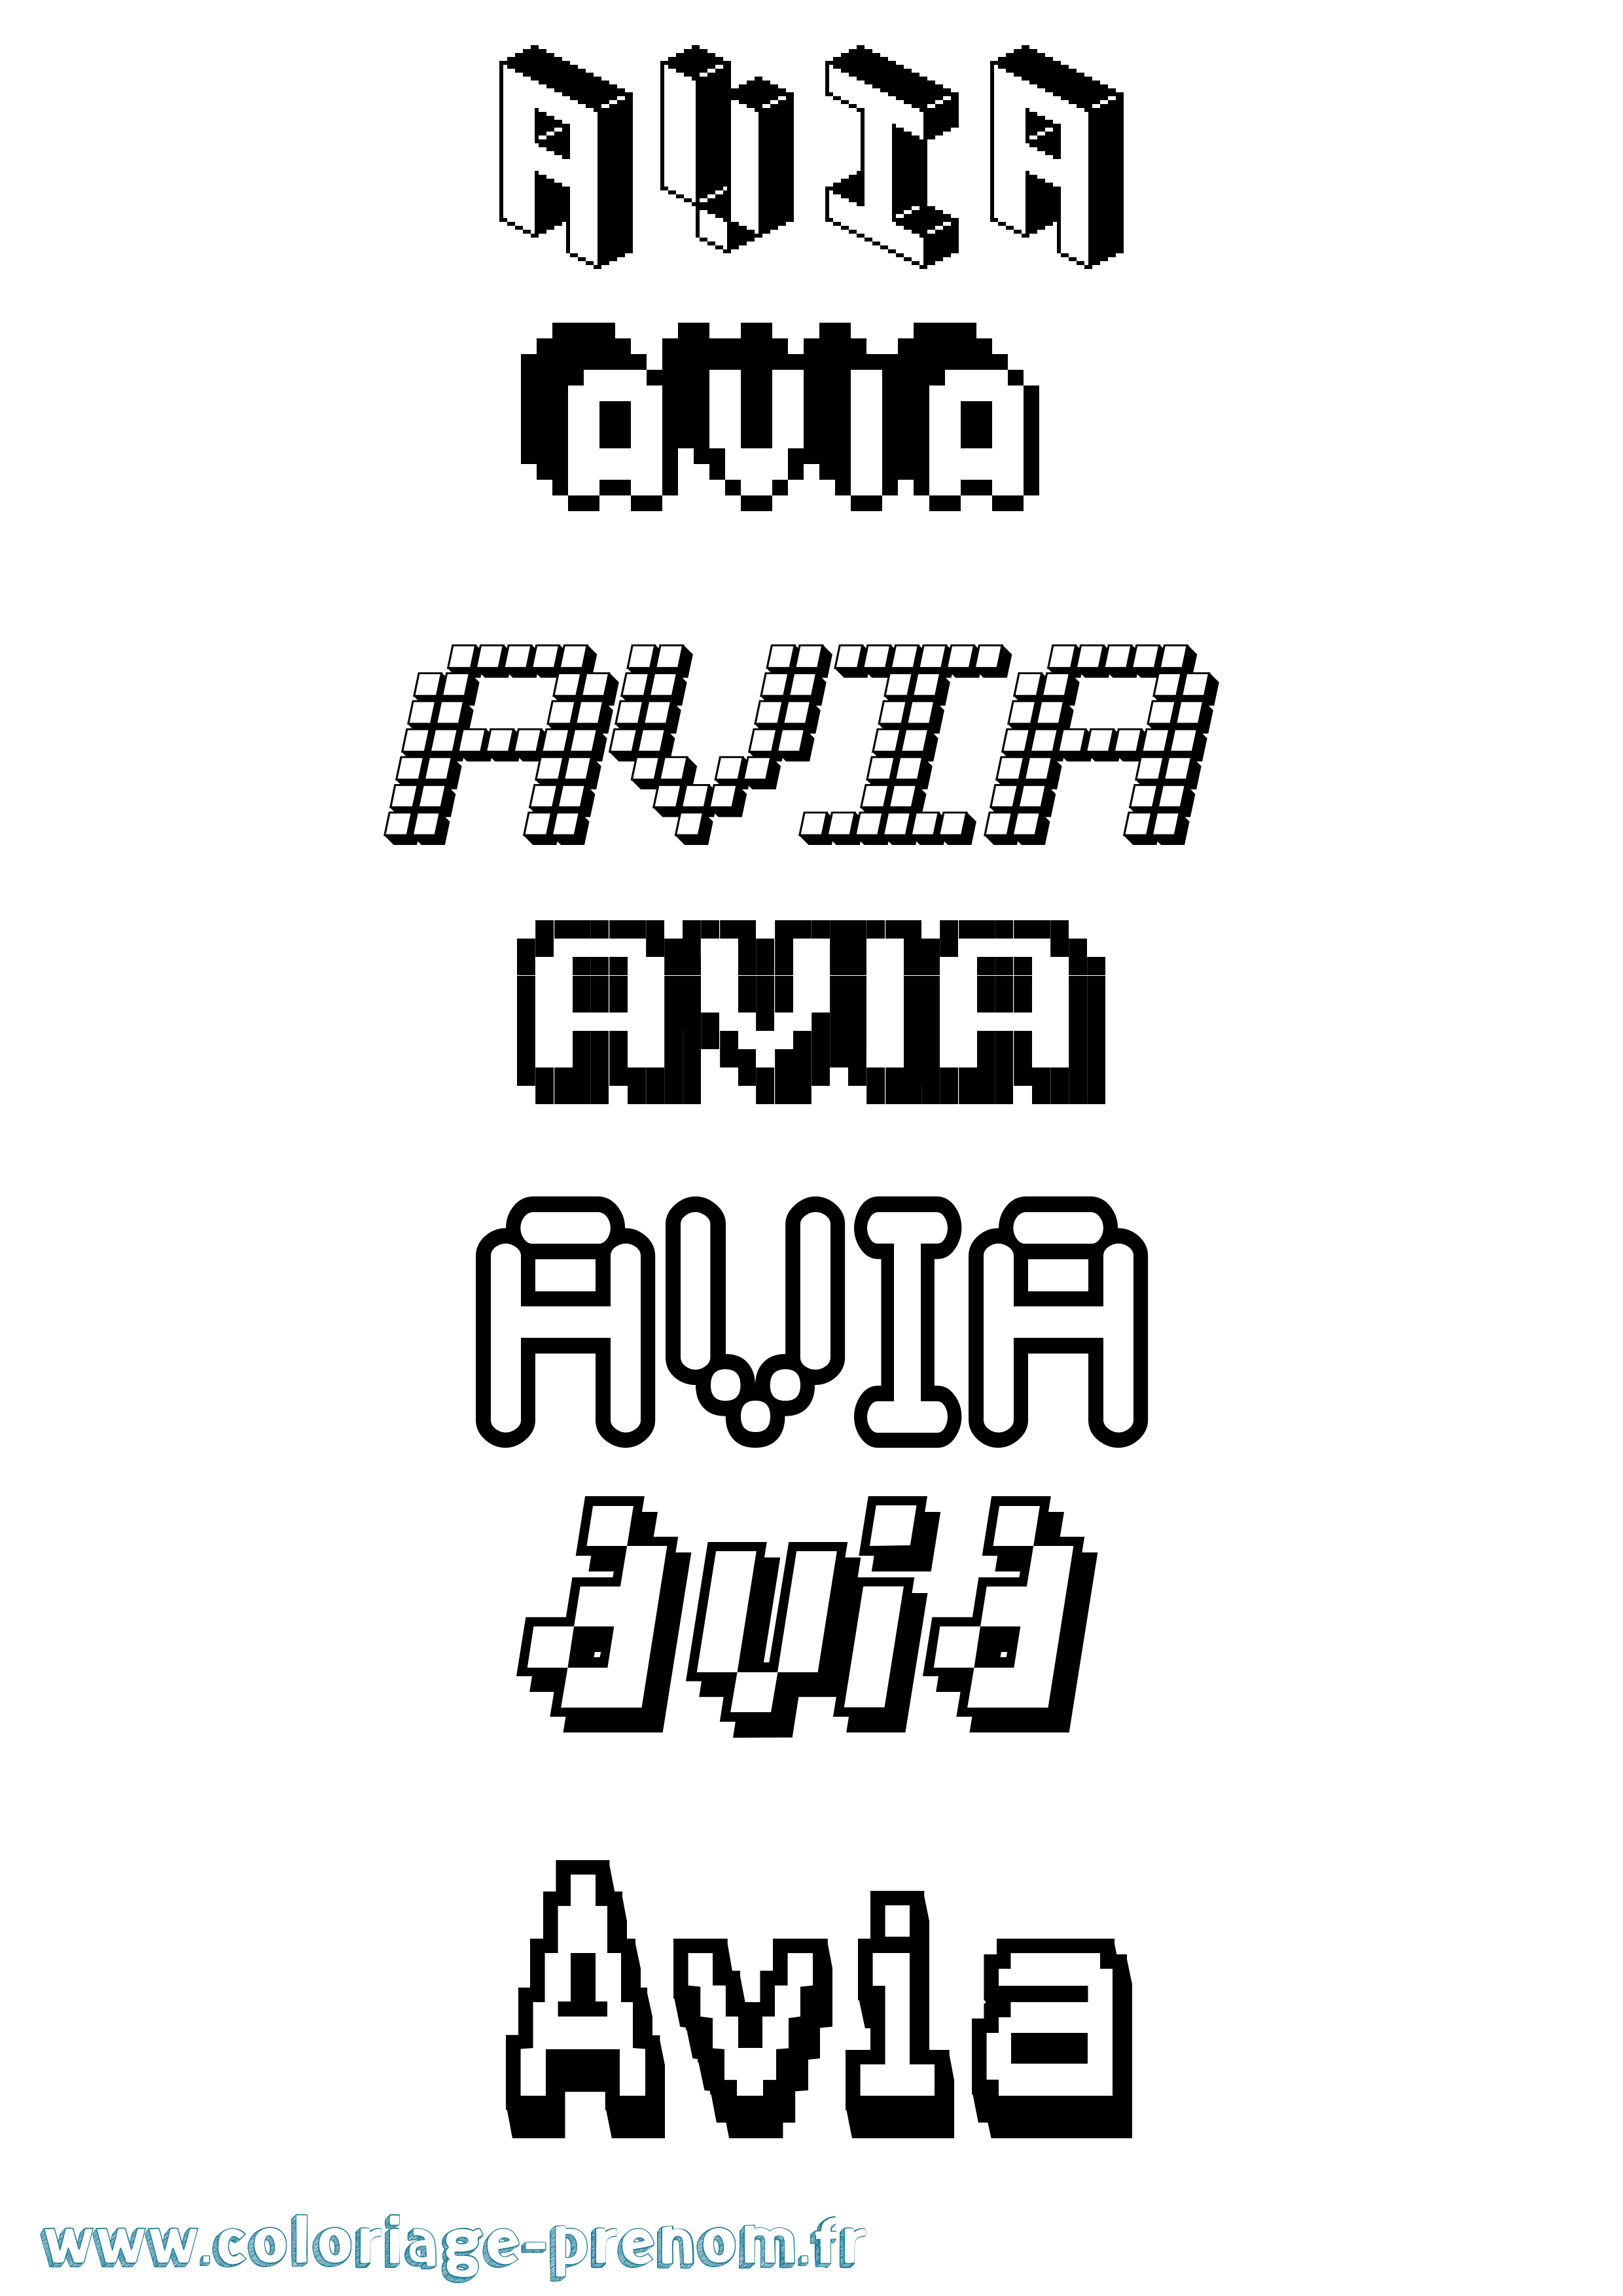 Coloriage prénom Avia Pixel